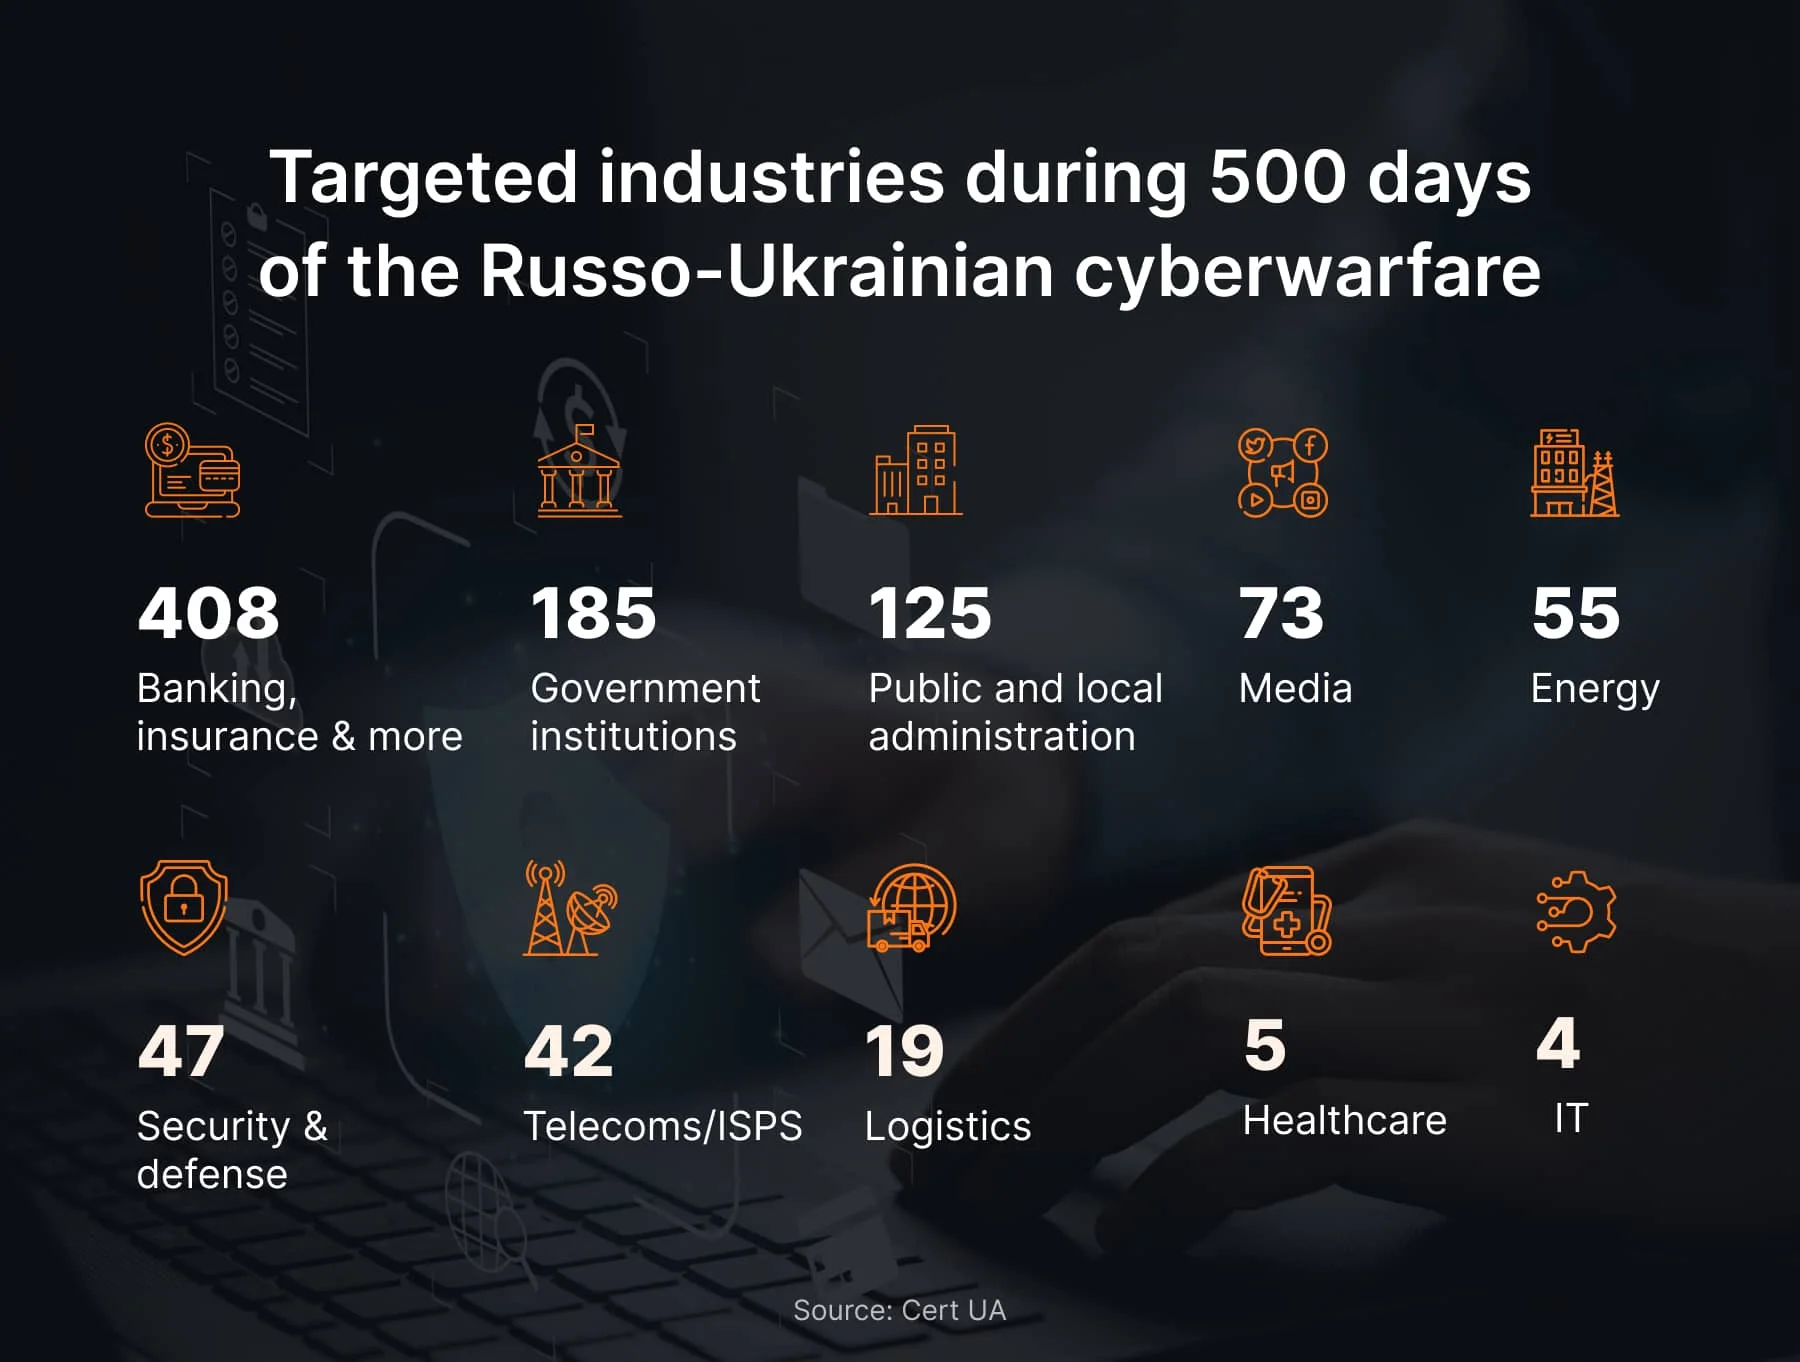 Targeted industies during 500 days of the Russo-Ukrainian cyberwarfare